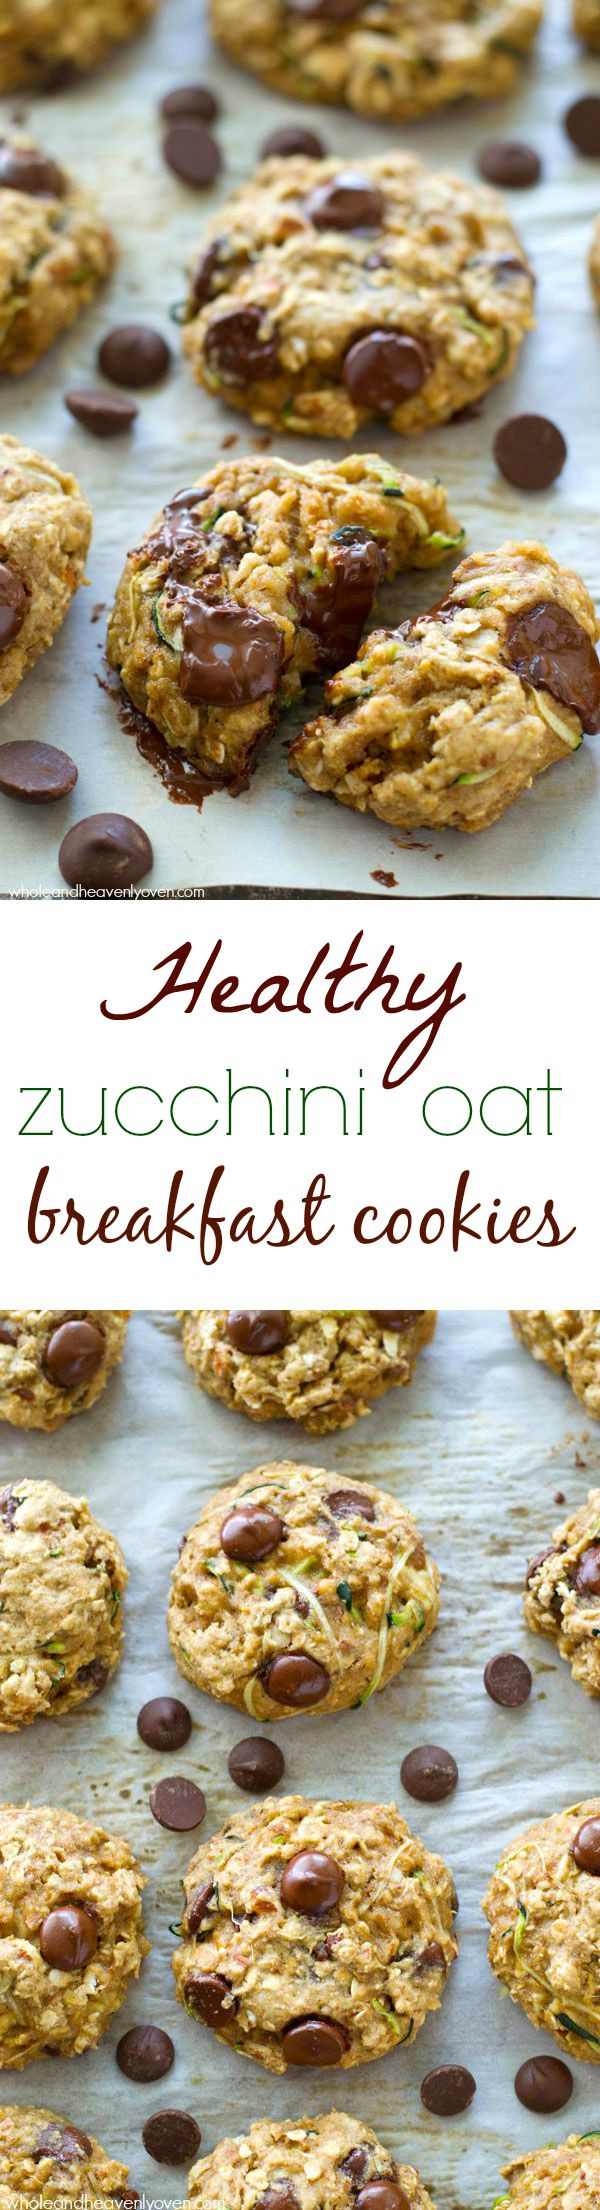 Healthy Zucchini Cookies
 Healthy Zucchini Oat Breakfast Cookies